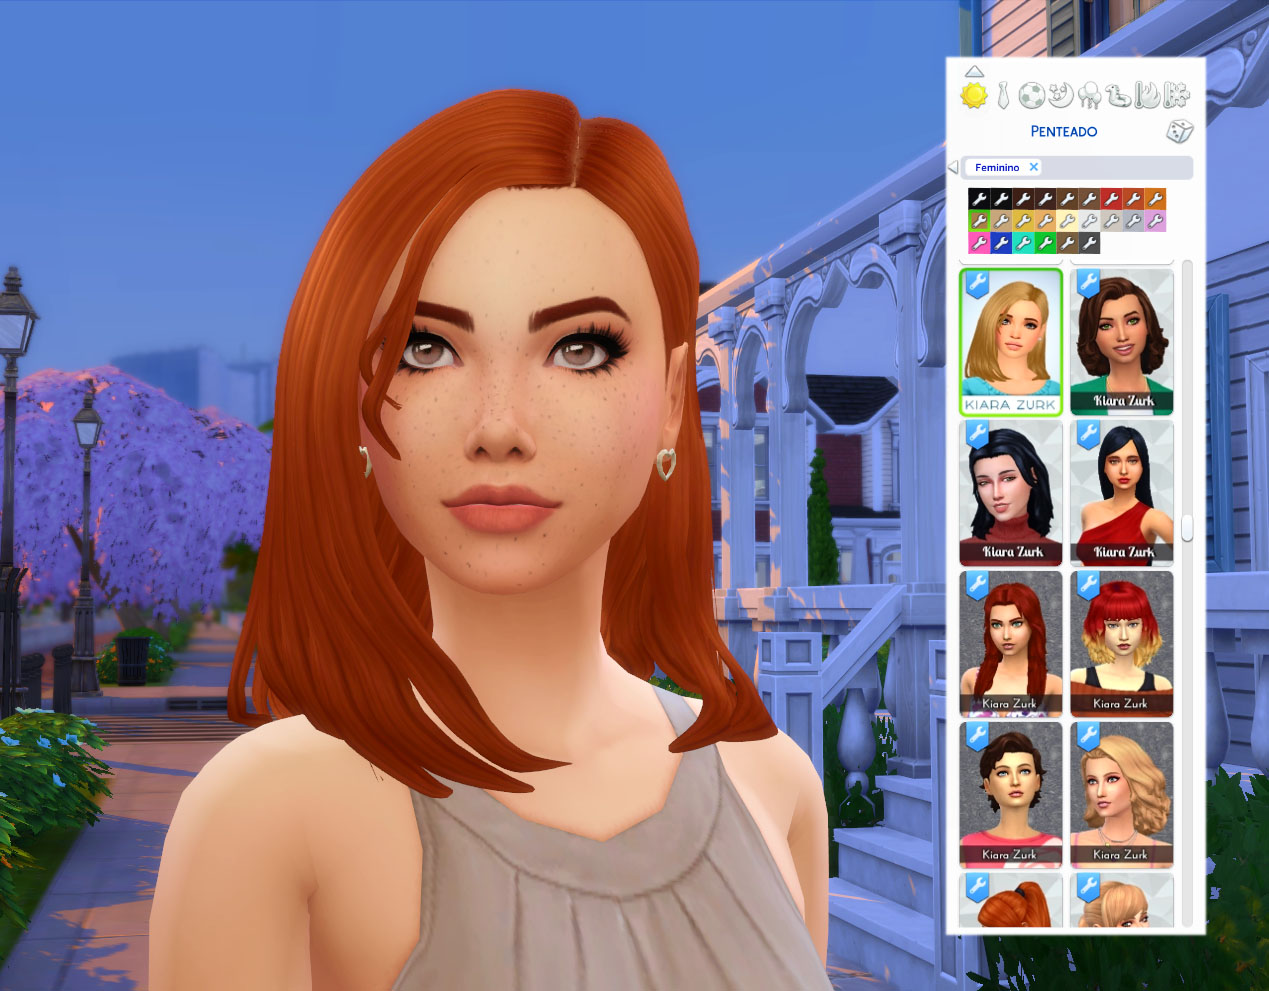 Luana Hairstyle - The Sims 4 Create a Sim - CurseForge